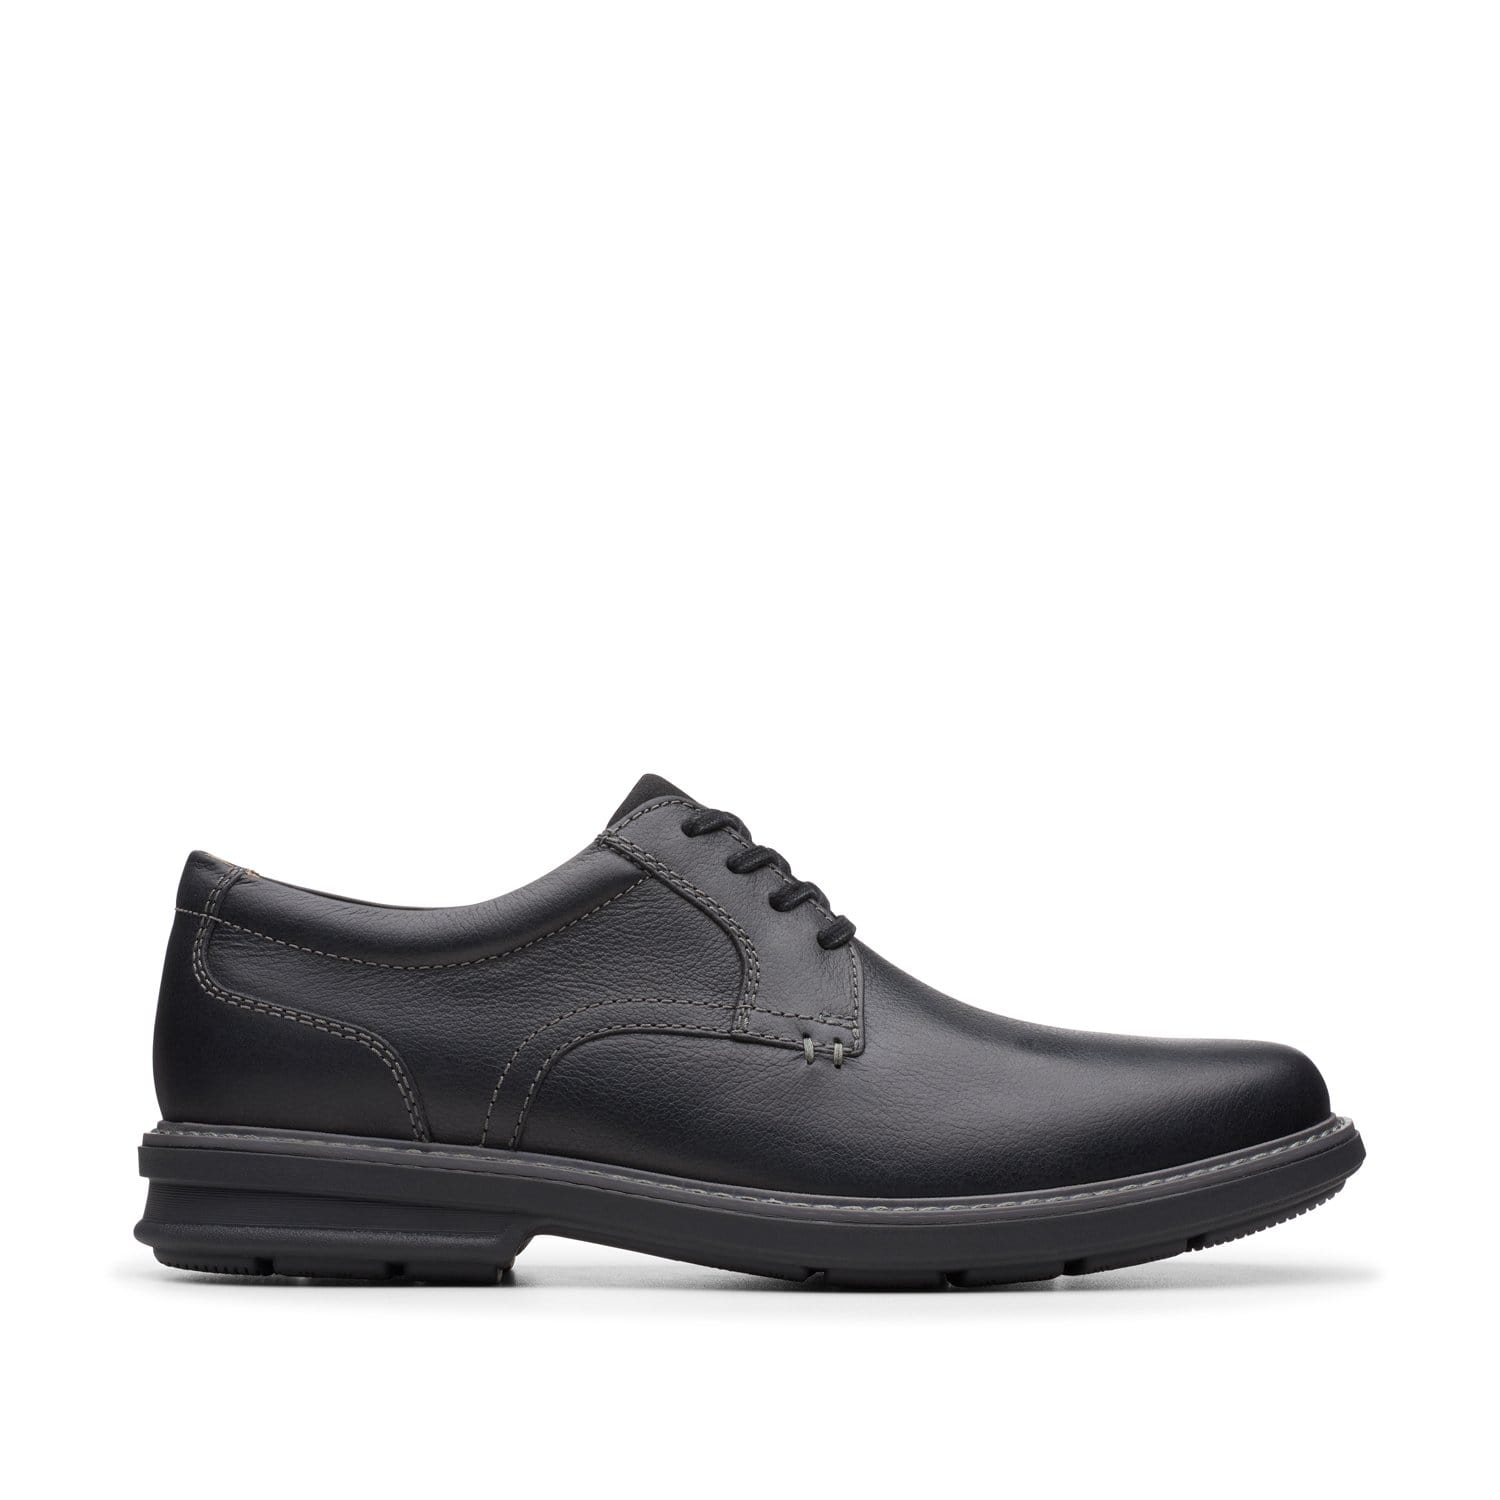 Clarks-Rendell-Plain-Men's-Shoes-Black-Leather-26145346